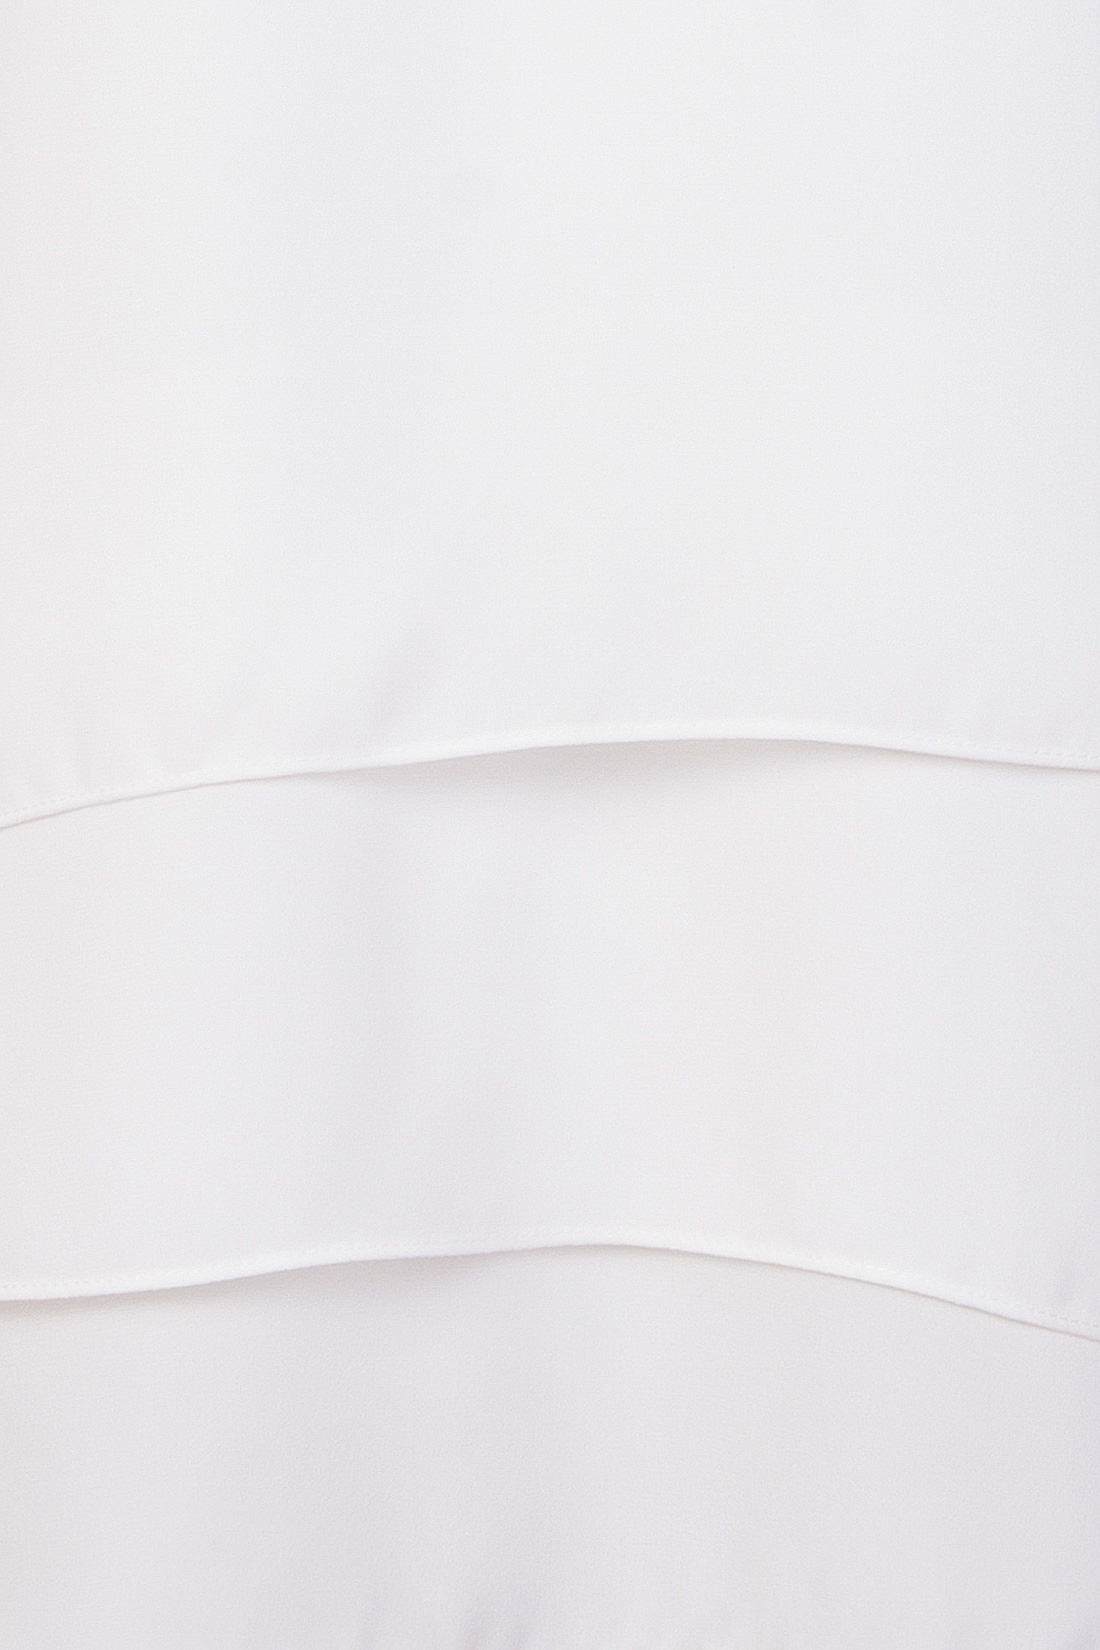 Блузка с многослойной отделкой (арт. baon B197006), размер L, цвет белый Блузка с многослойной отделкой (арт. baon B197006) - фото 3